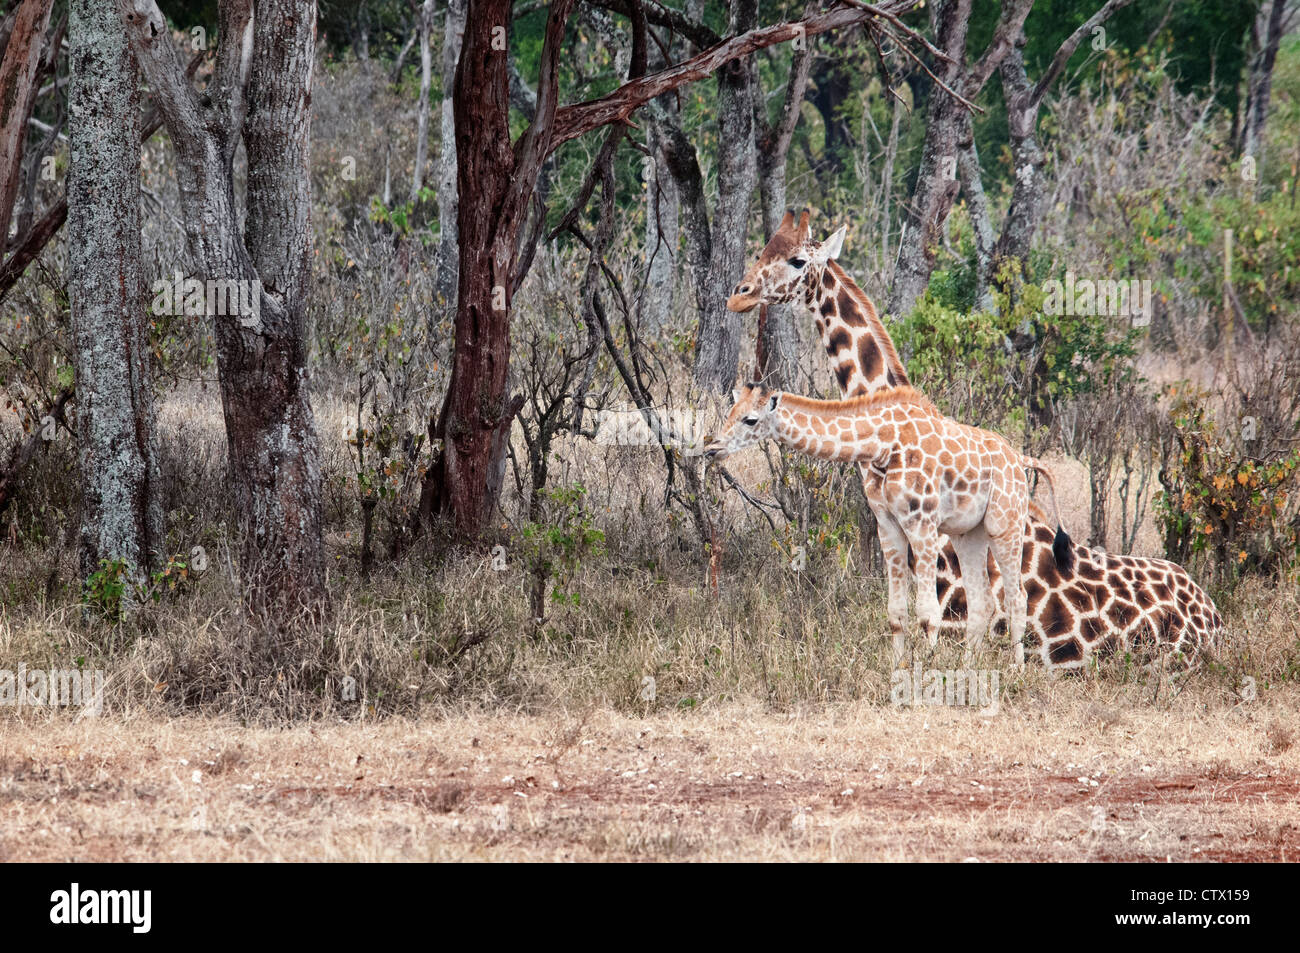 Rothschild Giraffe, Giraffa camelopardalis rothschild, mother sitting with her calf, Giraffe Manor, Nairobi, Kenya, Africa Stock Photo